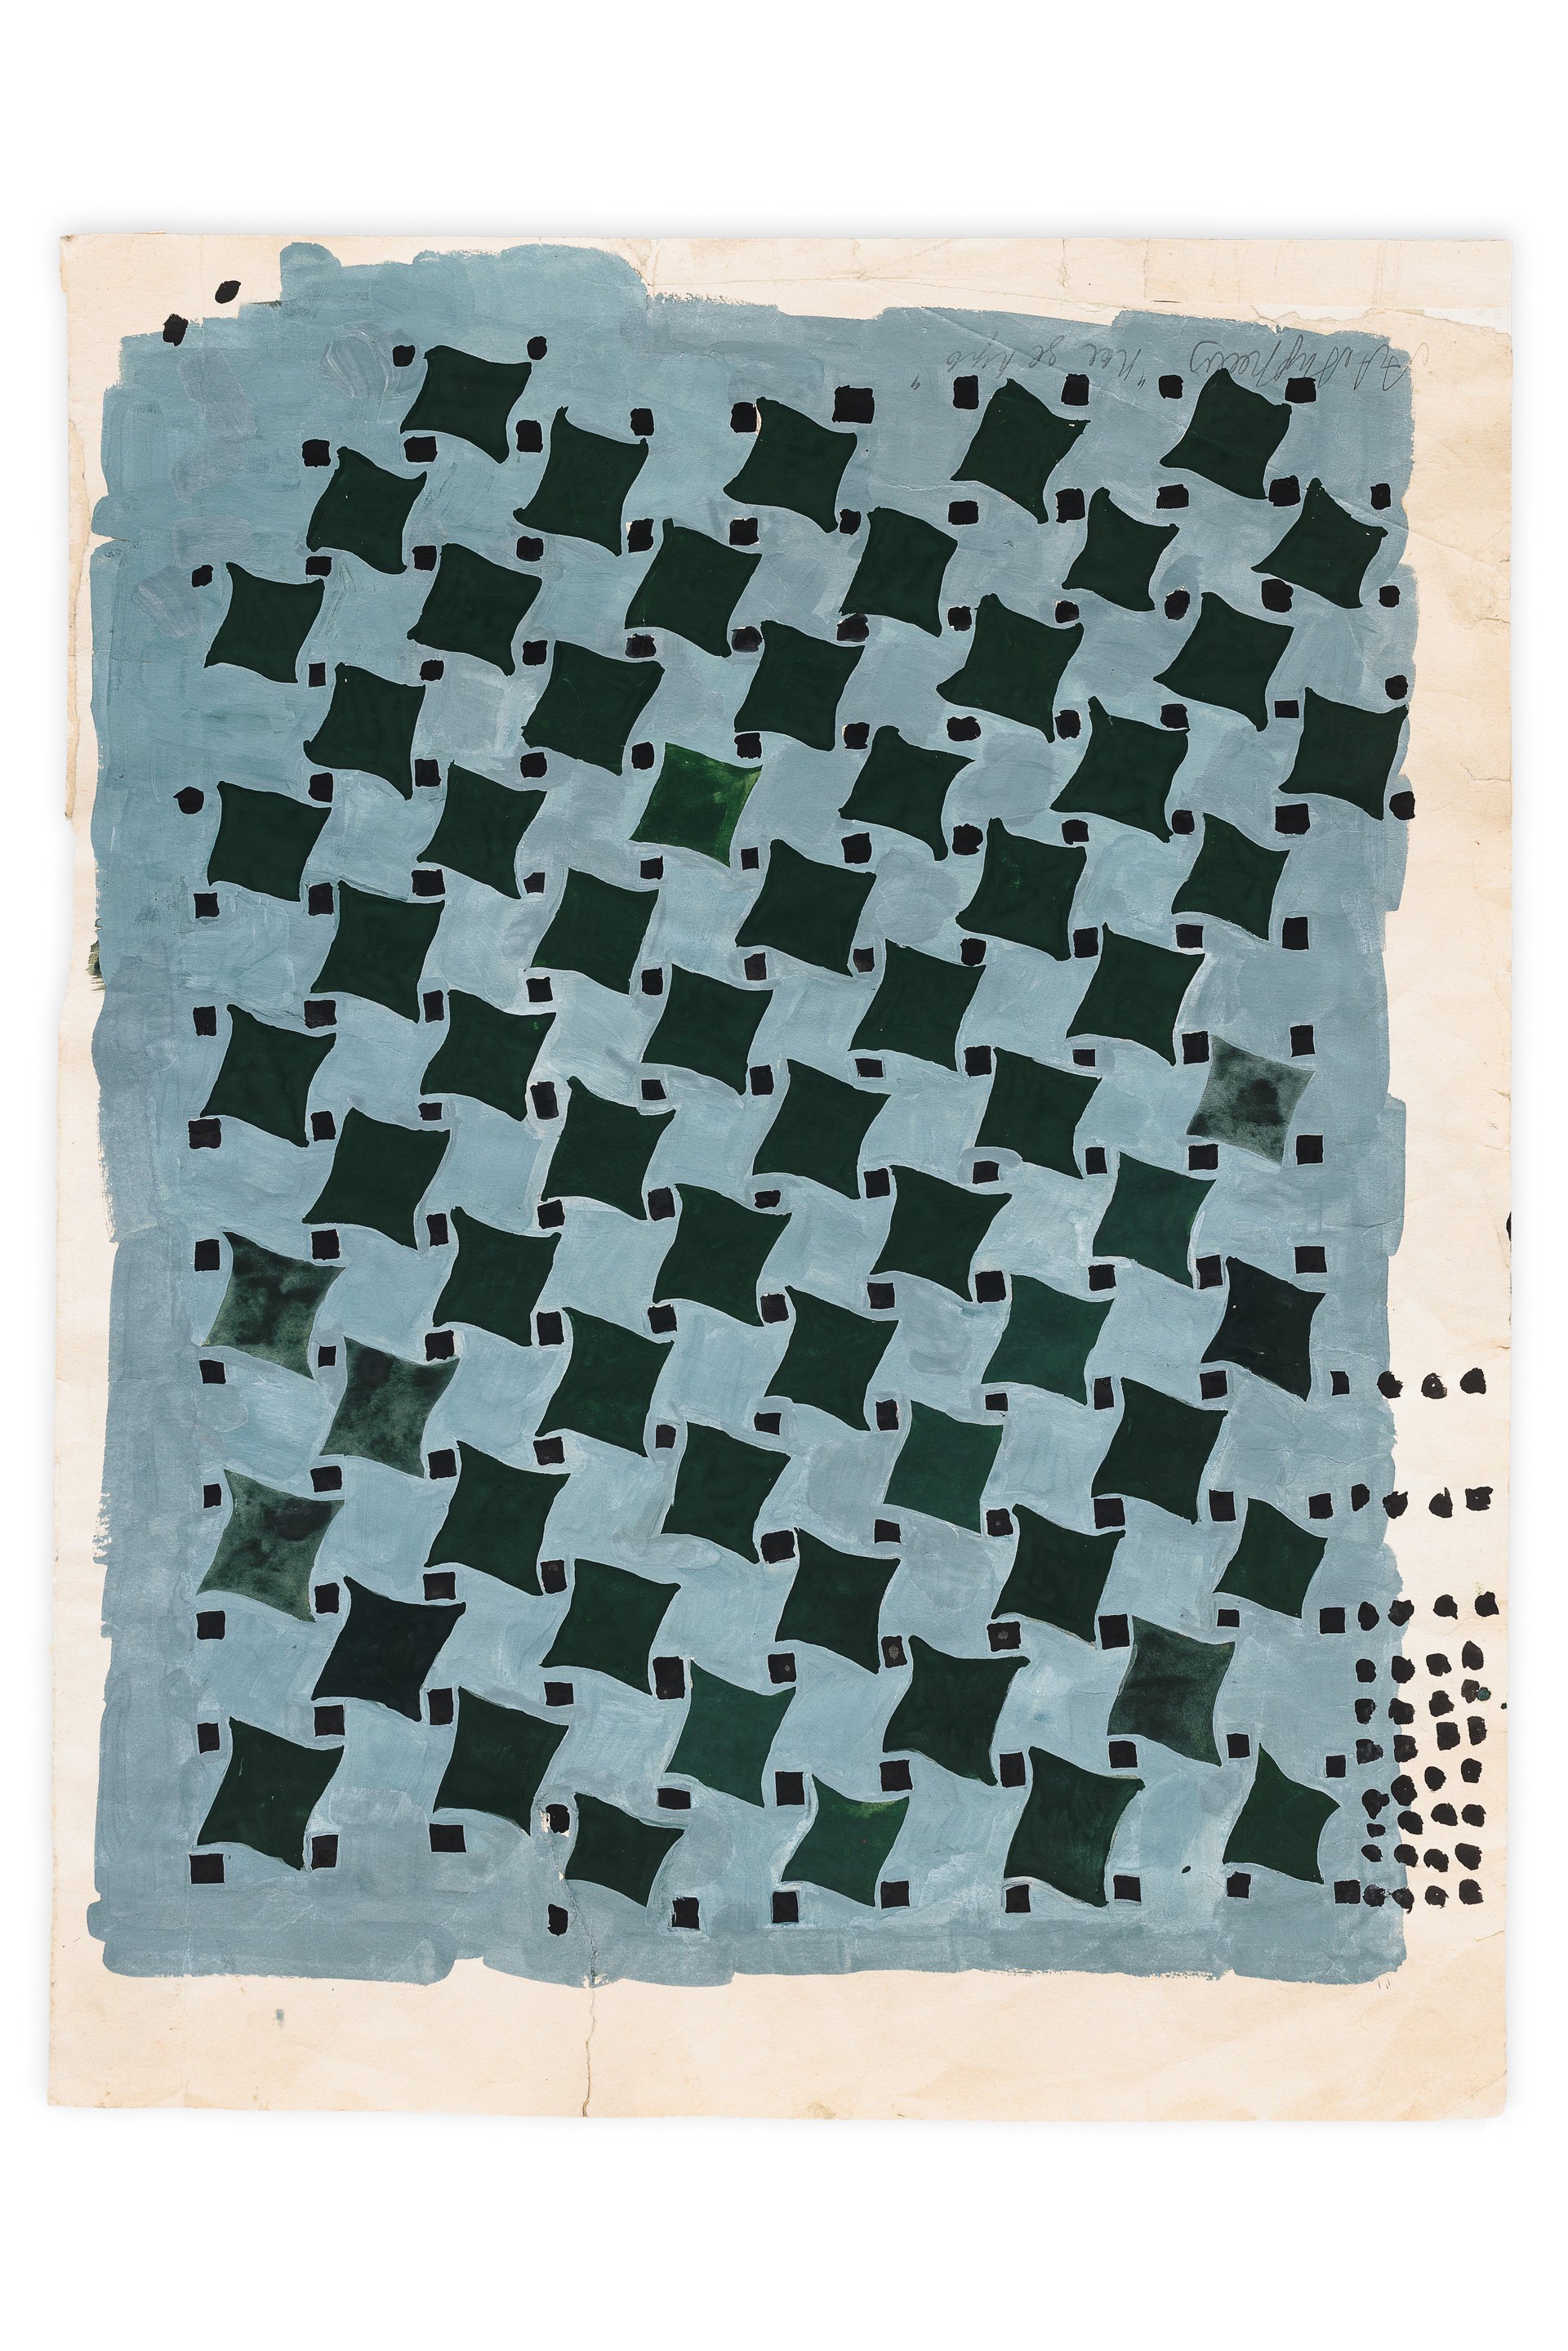 Anna AndreevaThe Grid, 1977Gouache on paper59.5 x 46 cm